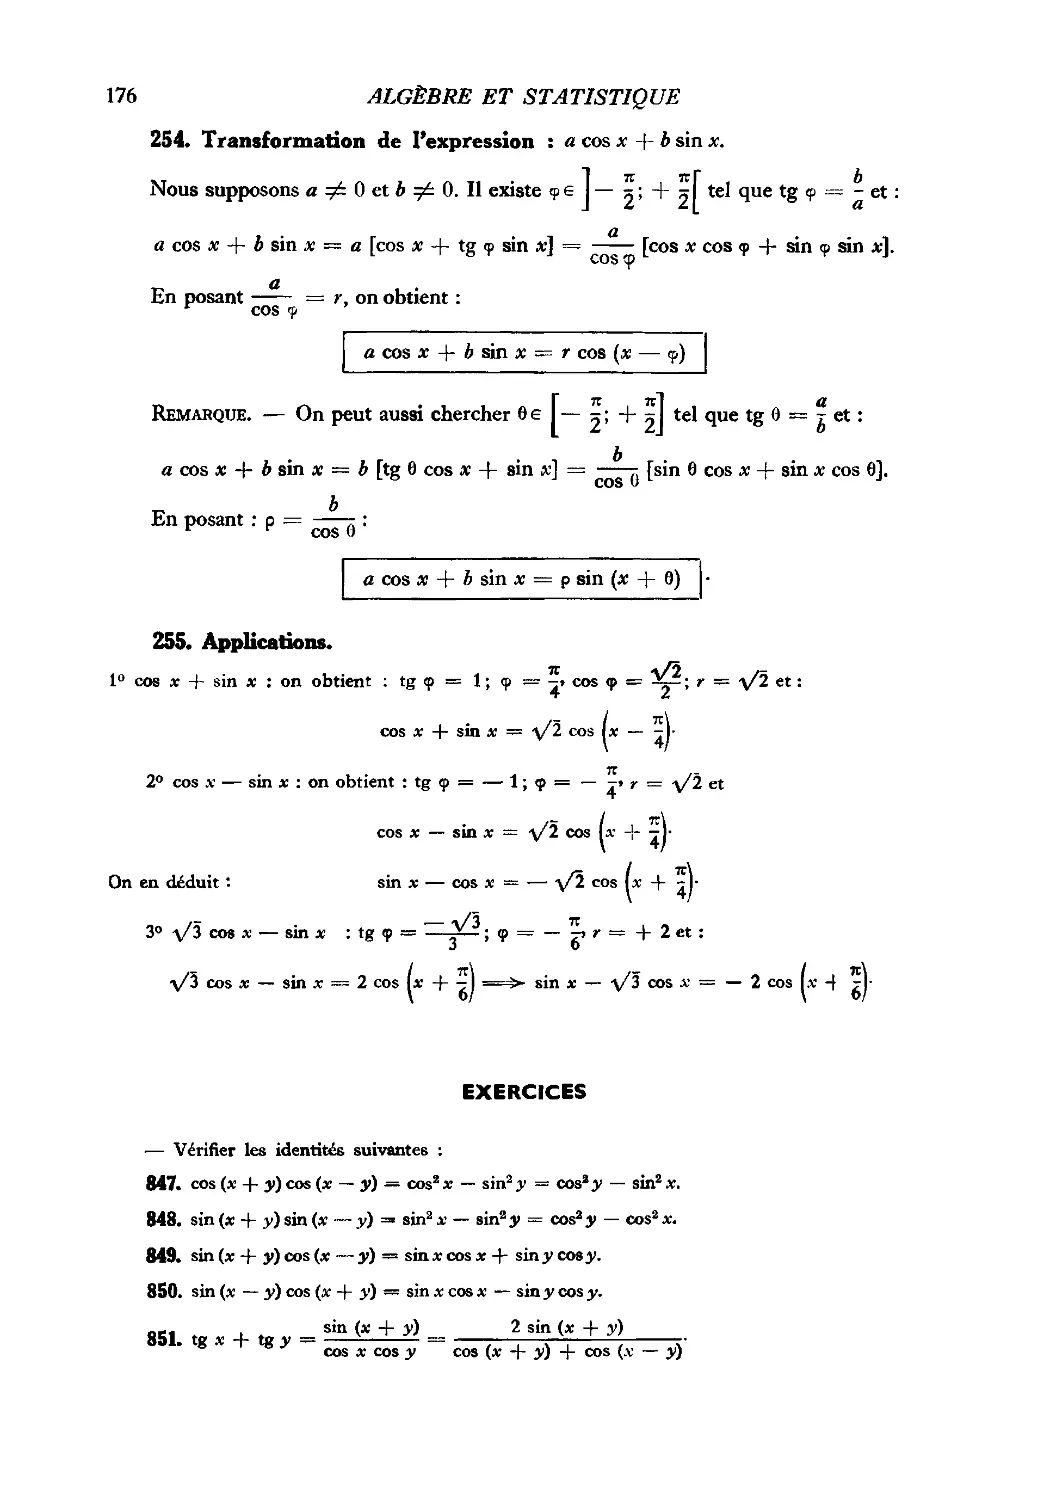 254. Transformation de l’expression a cos x + b sin x
255. Applications
Exercices